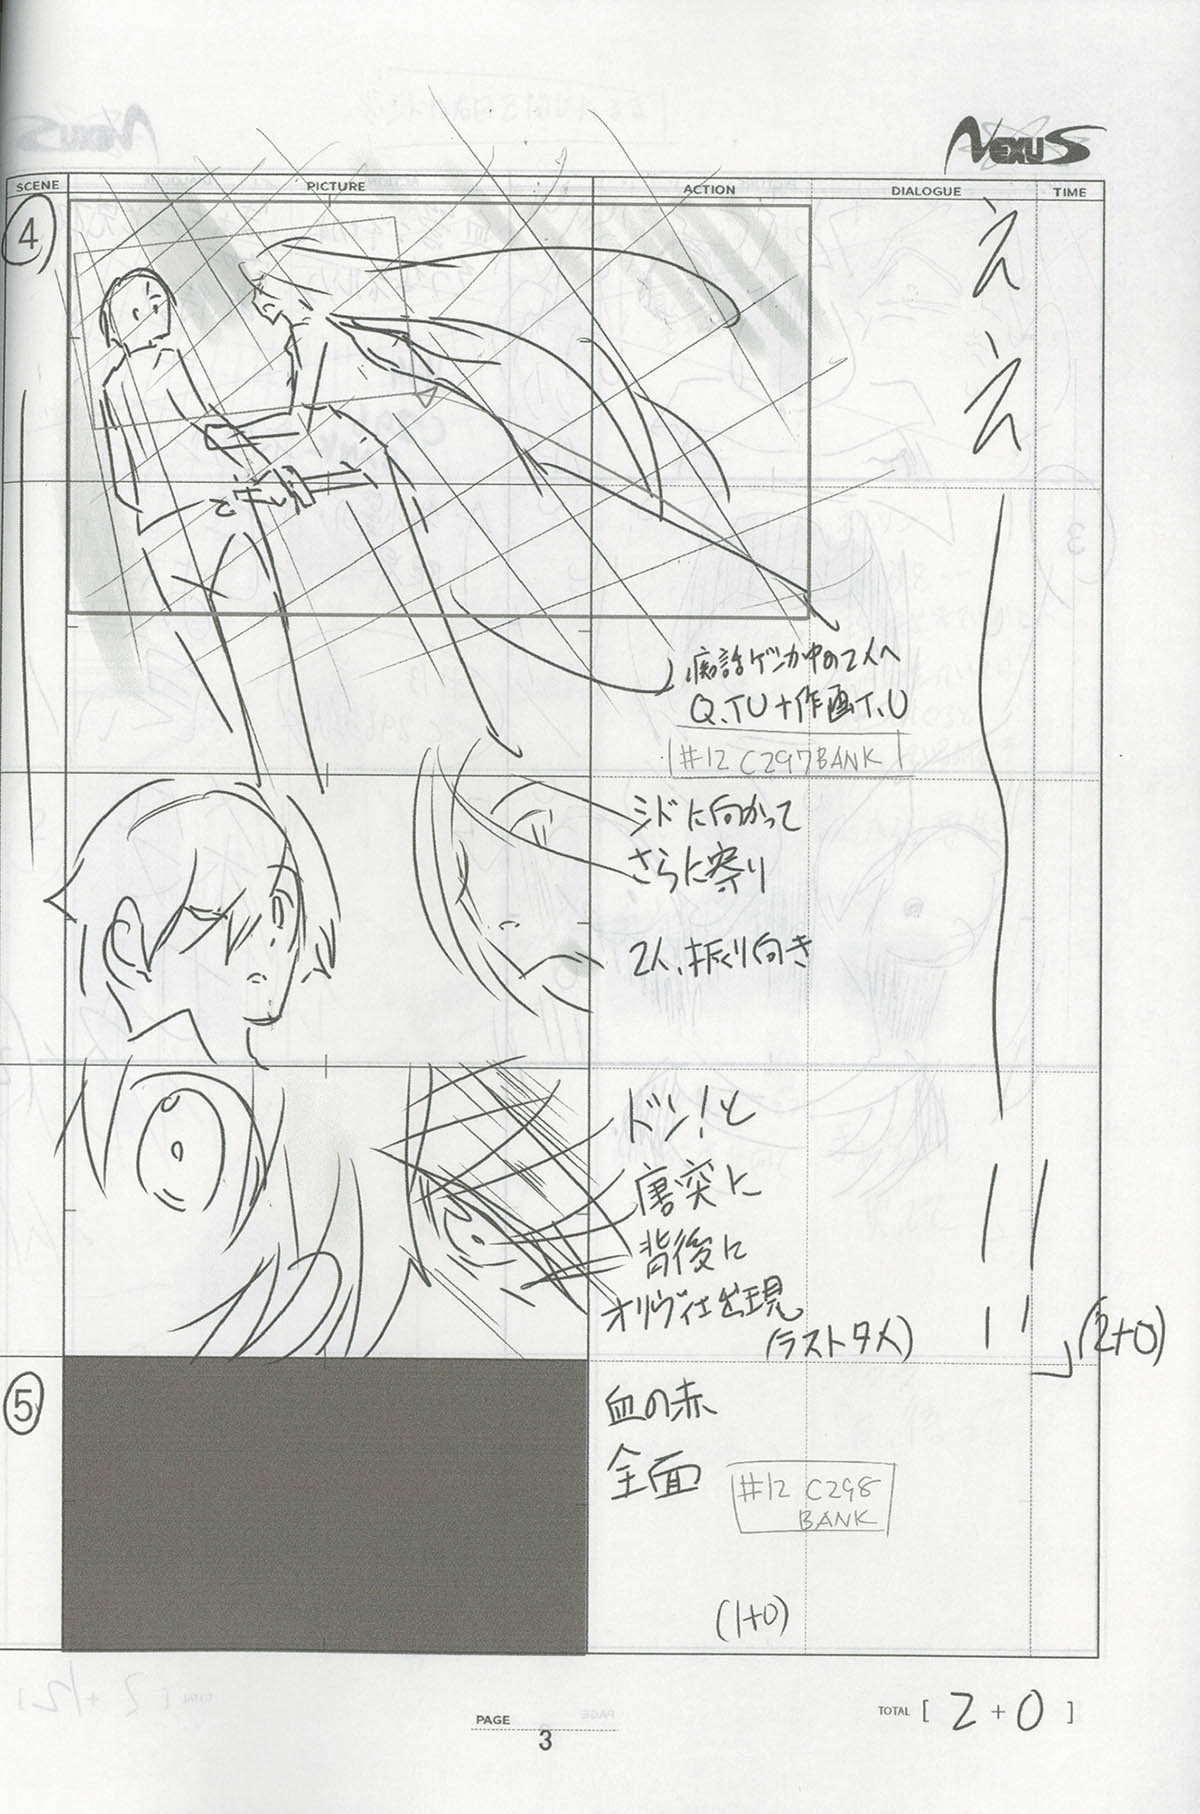 TEKNOMAN TEKKAMAN BLADE ART BOOK Masami Obari MECHA Animation STORYBOARD  Anime £56.29 - PicClick UK